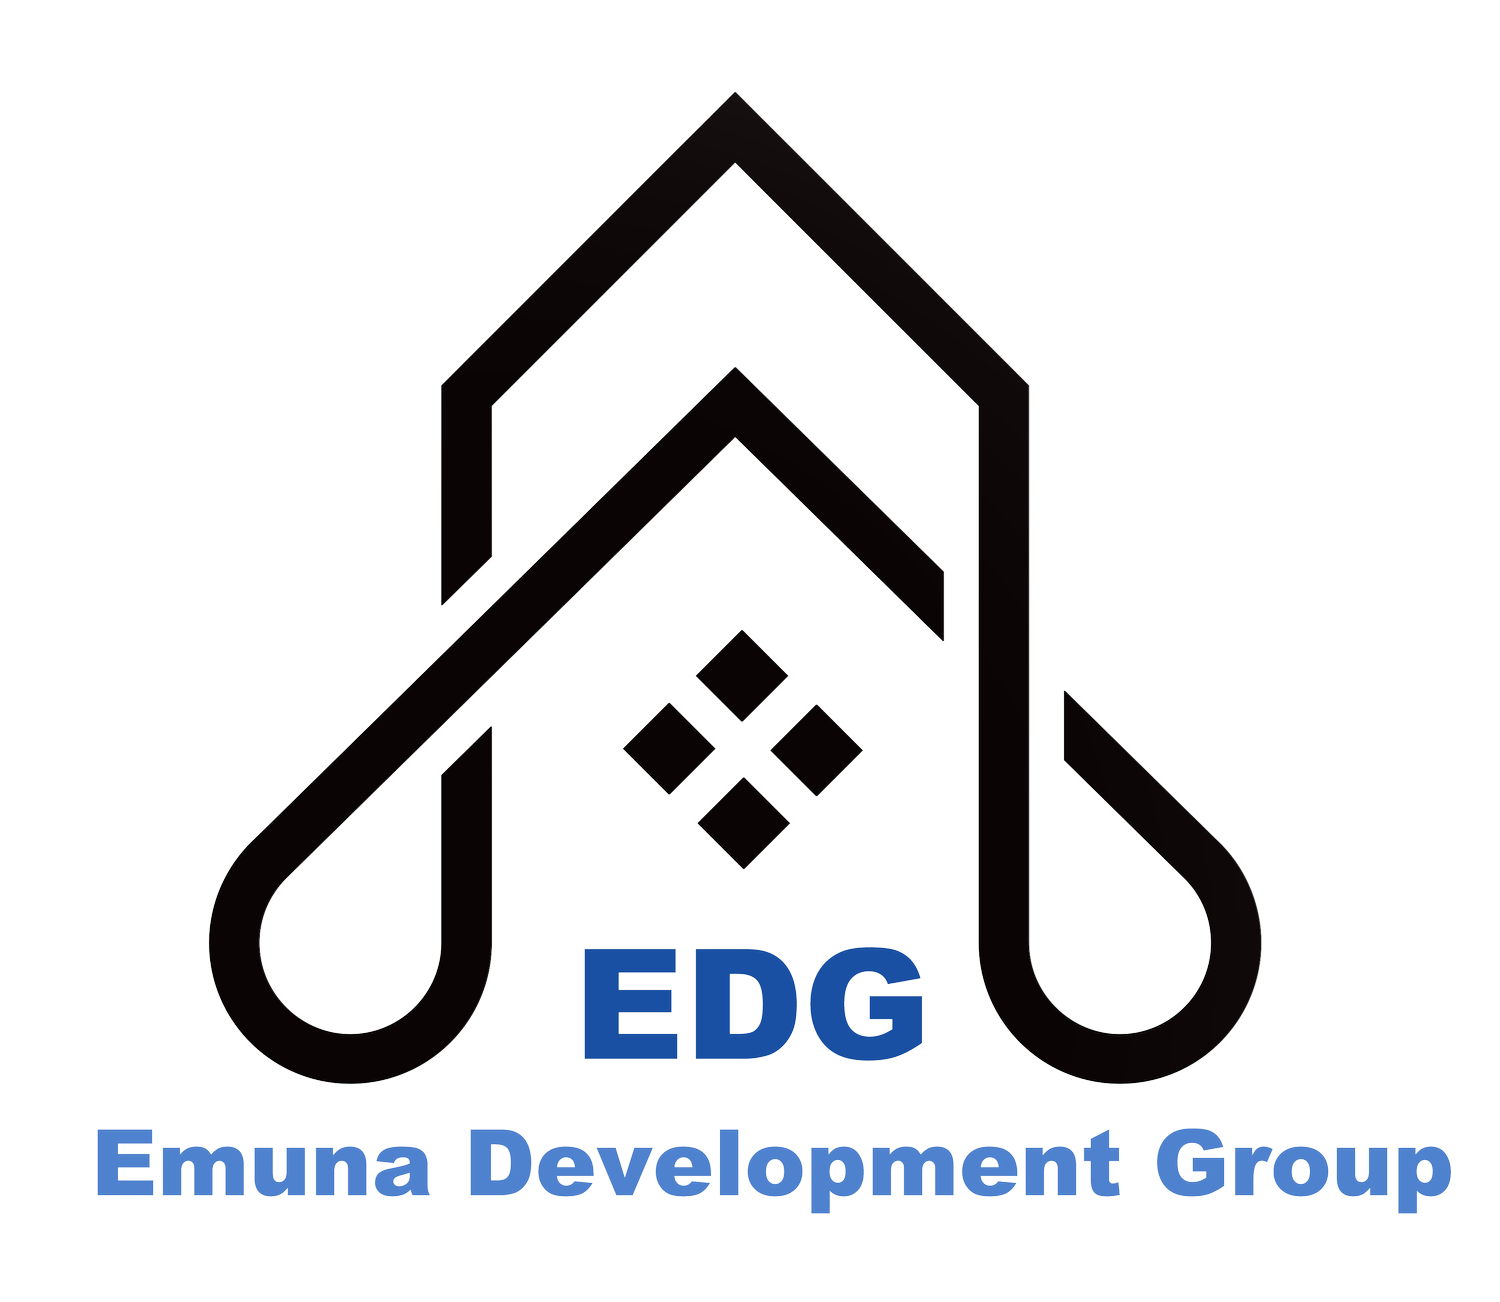 Emuna Development Group